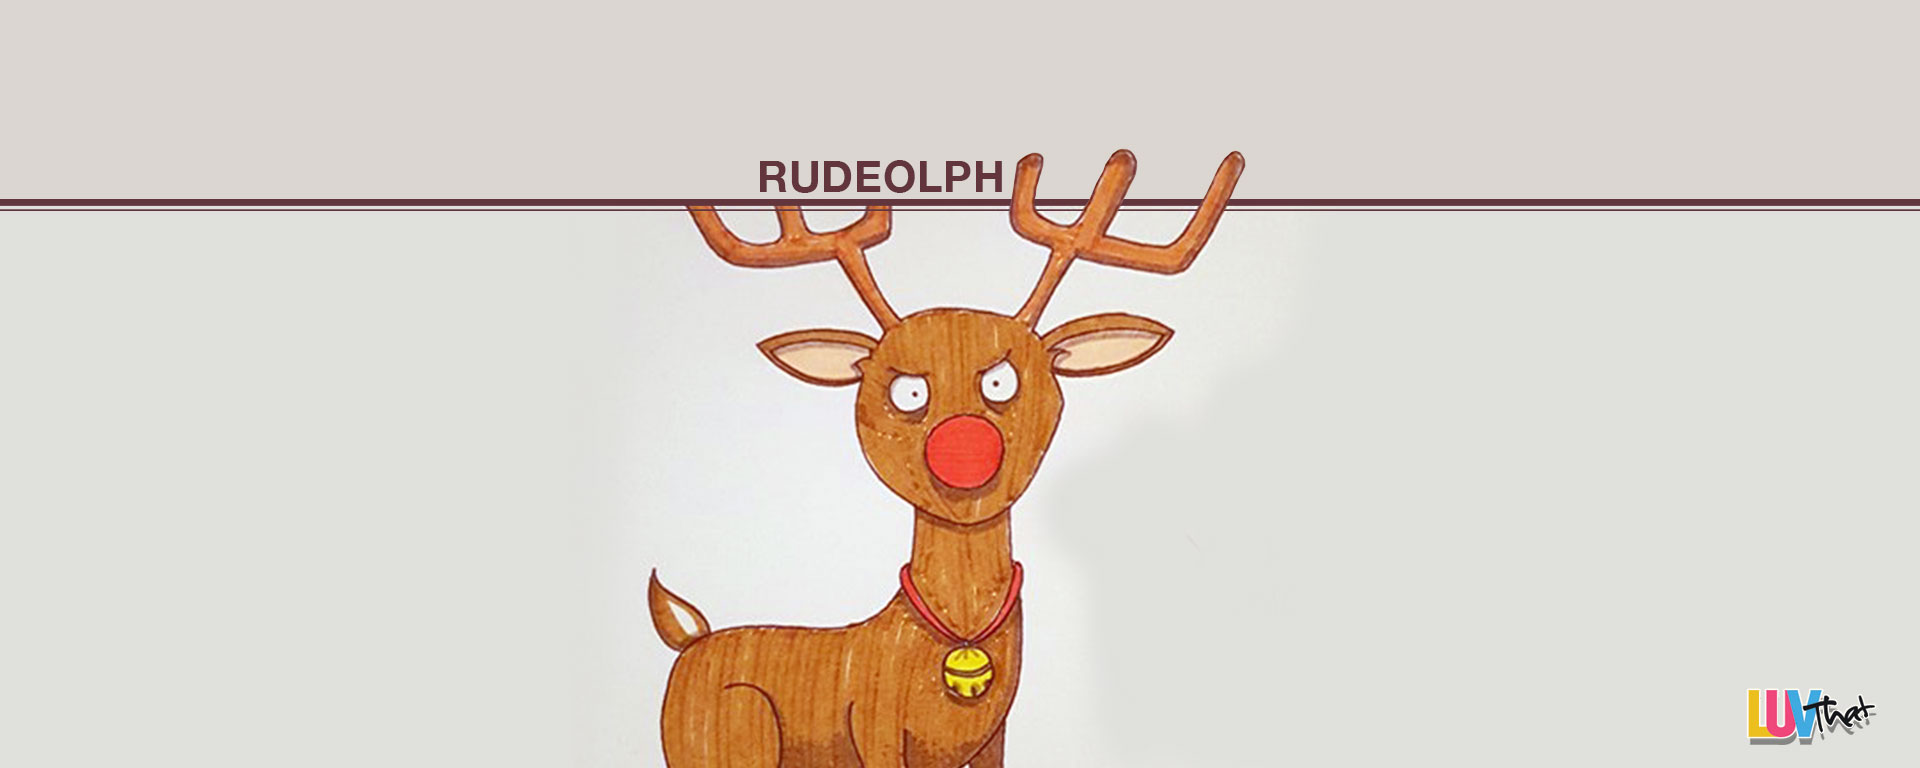 featured rudeolph